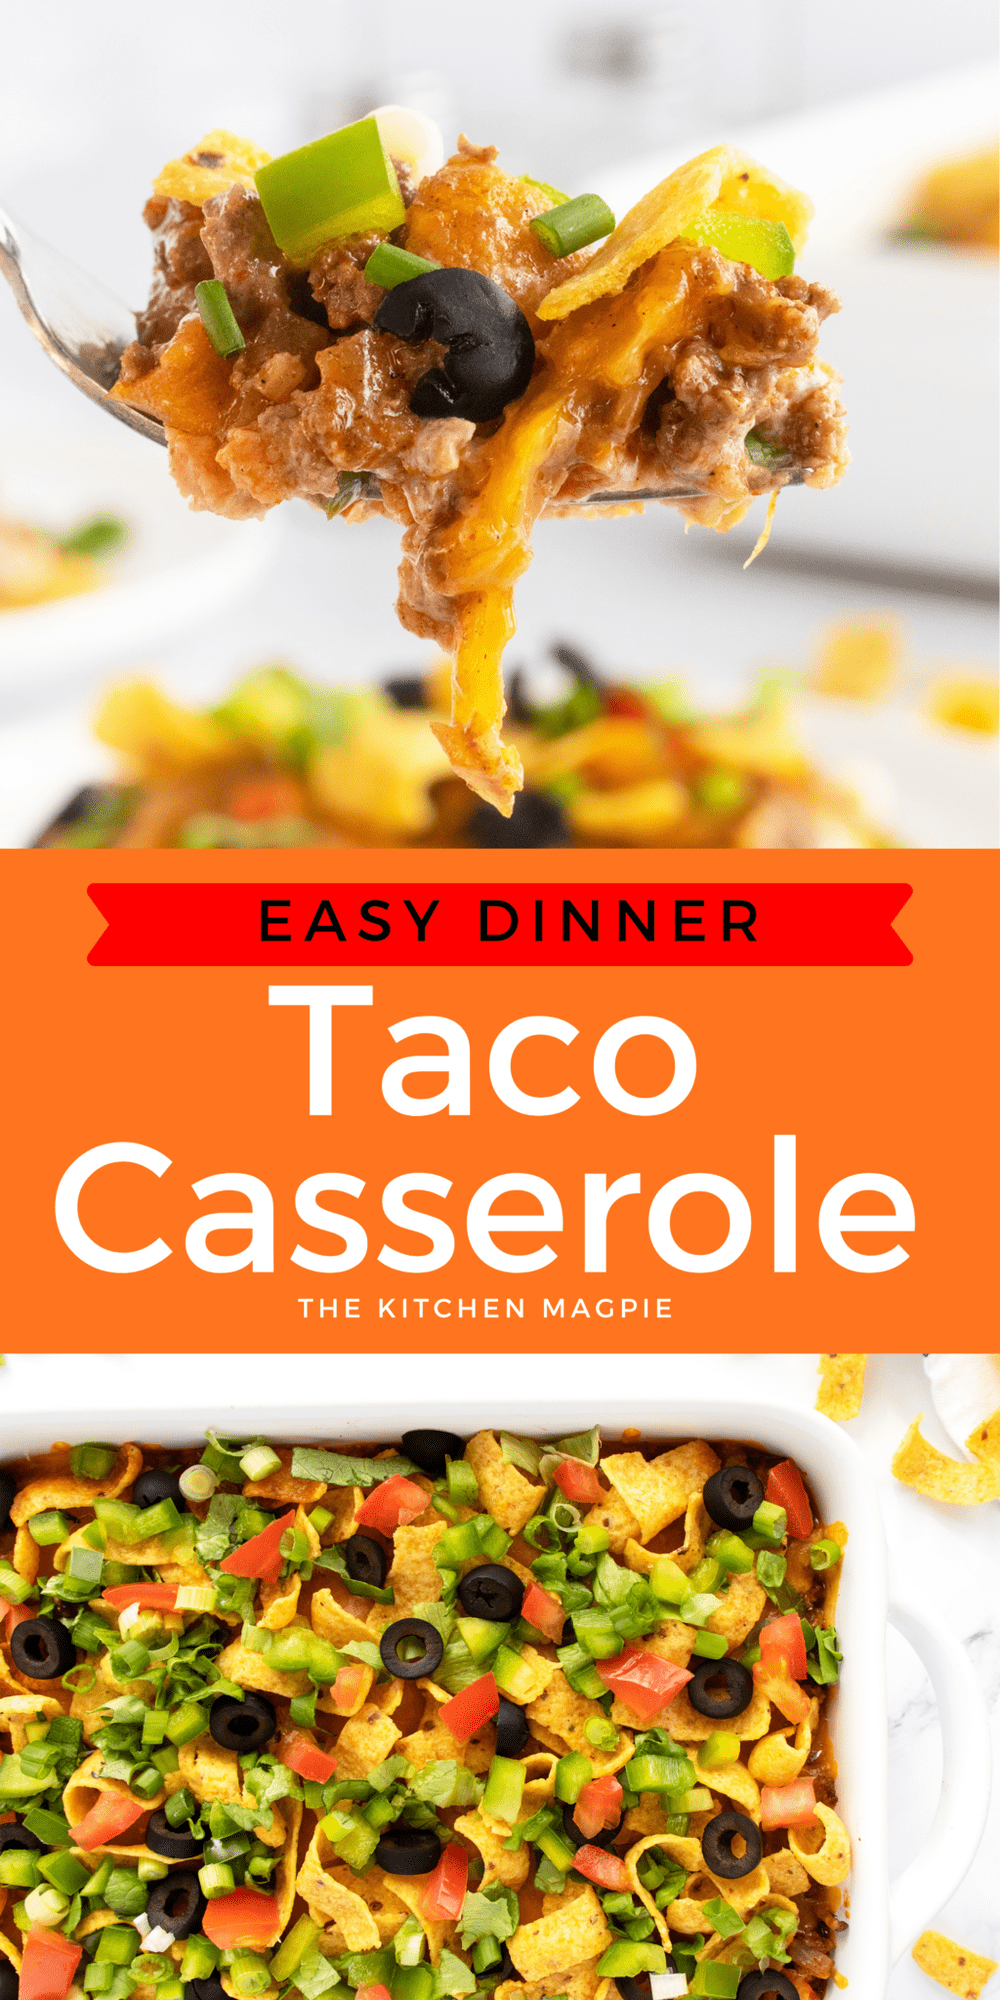 Taco Casserole - The Kitchen Magpie